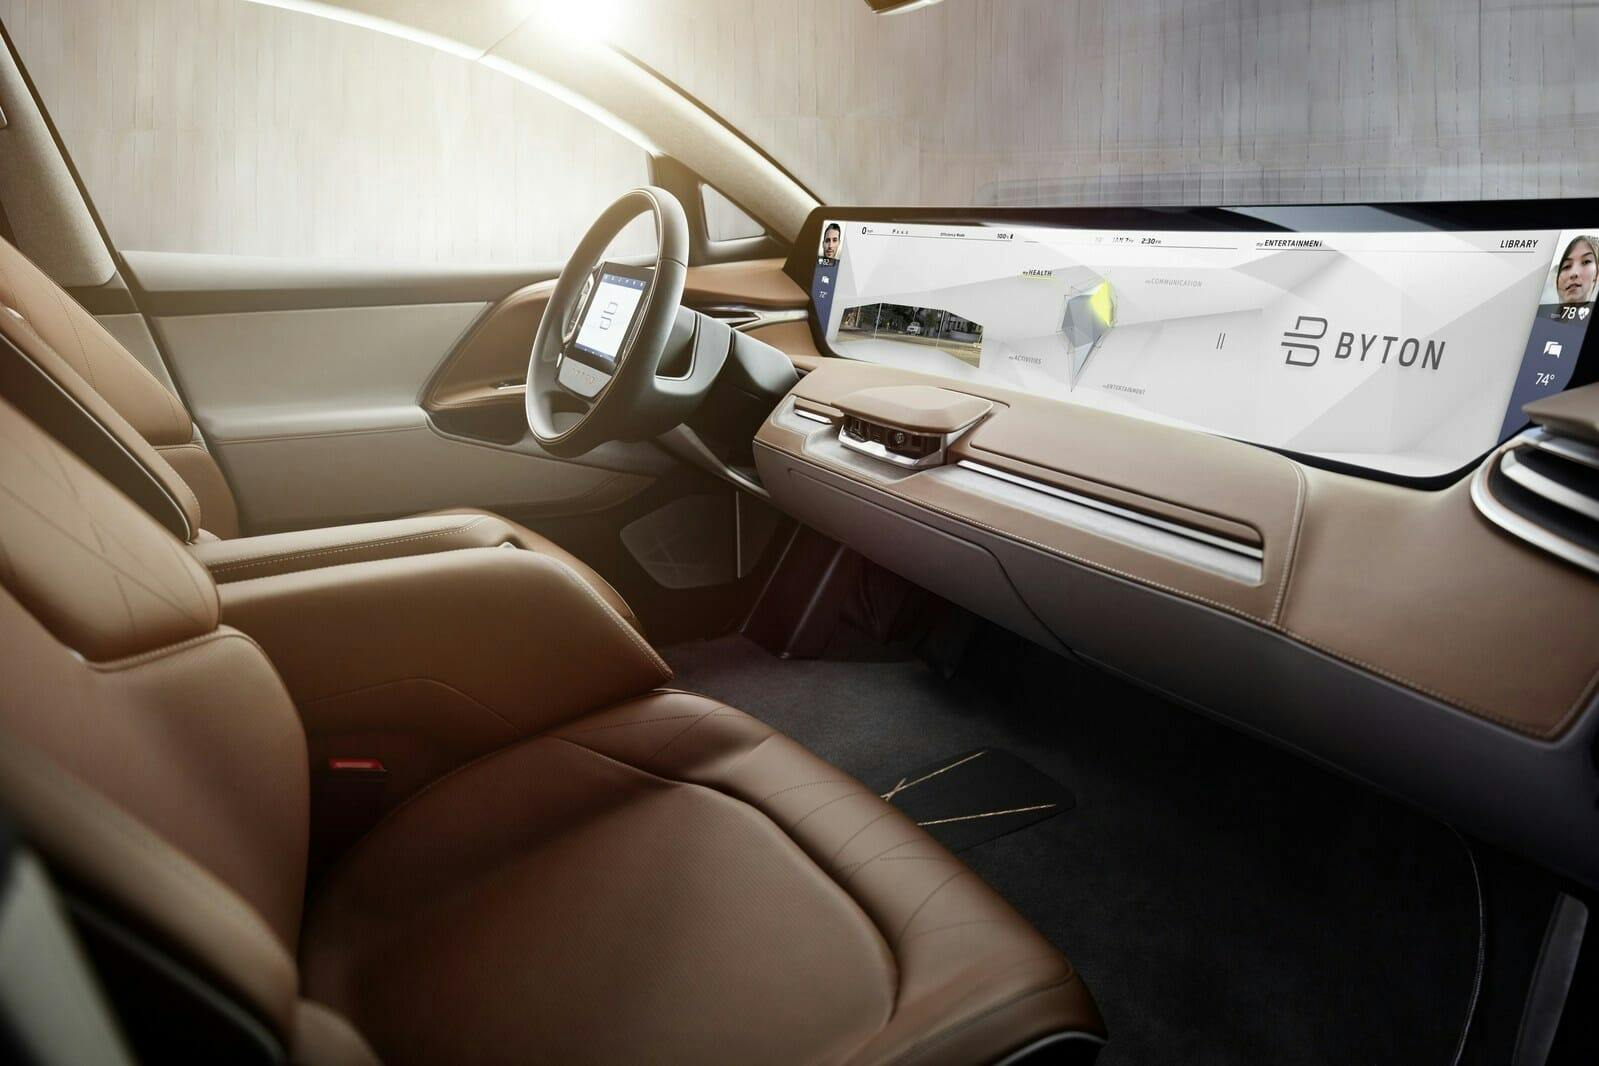 byton electric self-driving car interior display